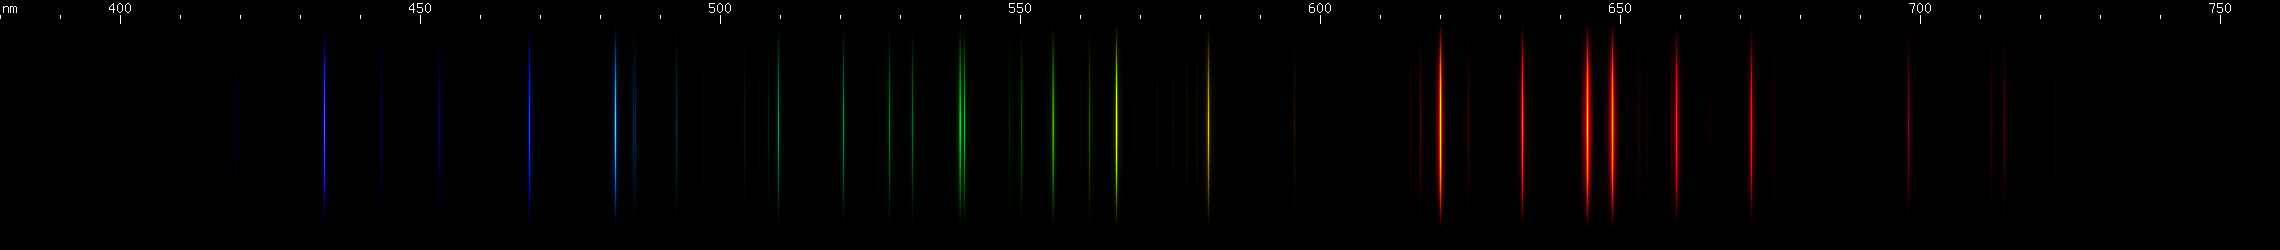 Spectral Lines of Radium